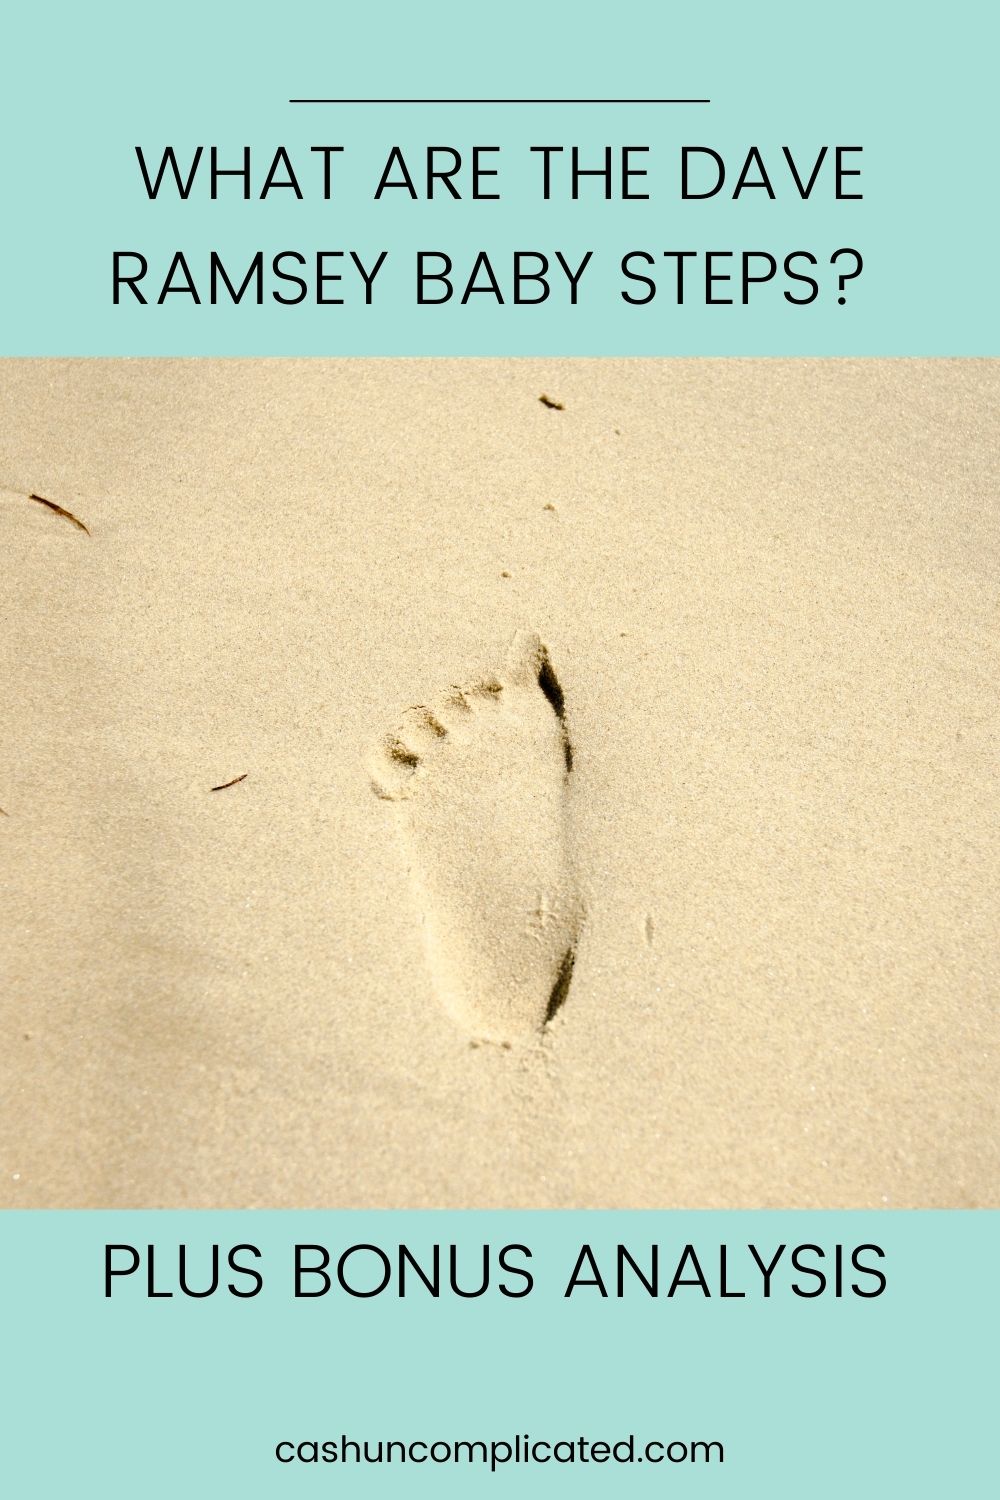 Baby footprint in sand